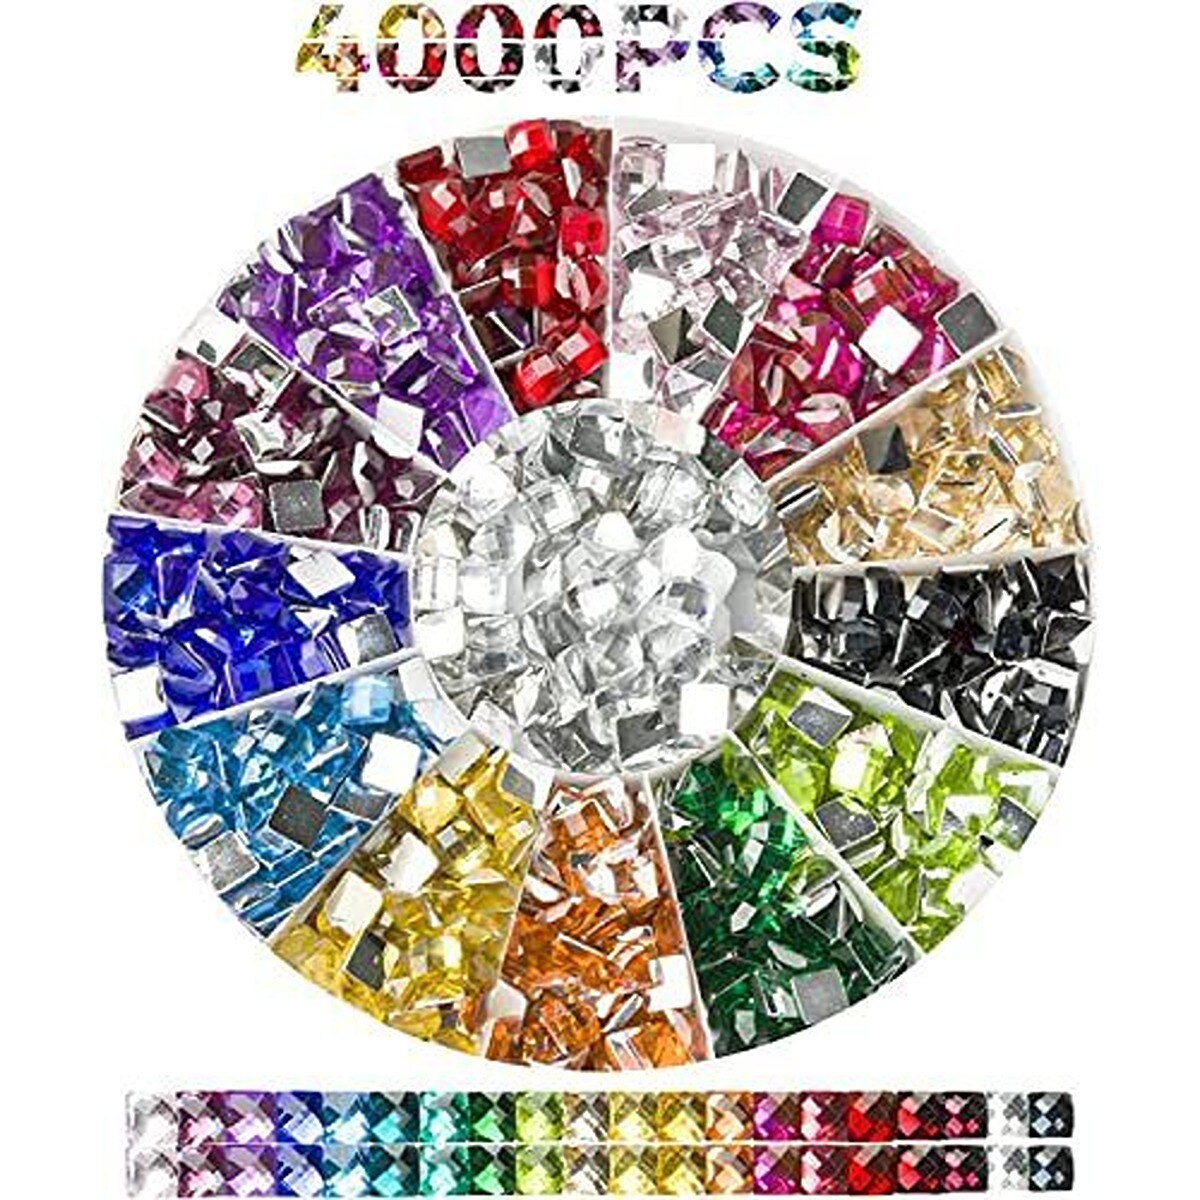 Buy 4000PCS Glitter Beads for Diamond Painting, Diamond Painting